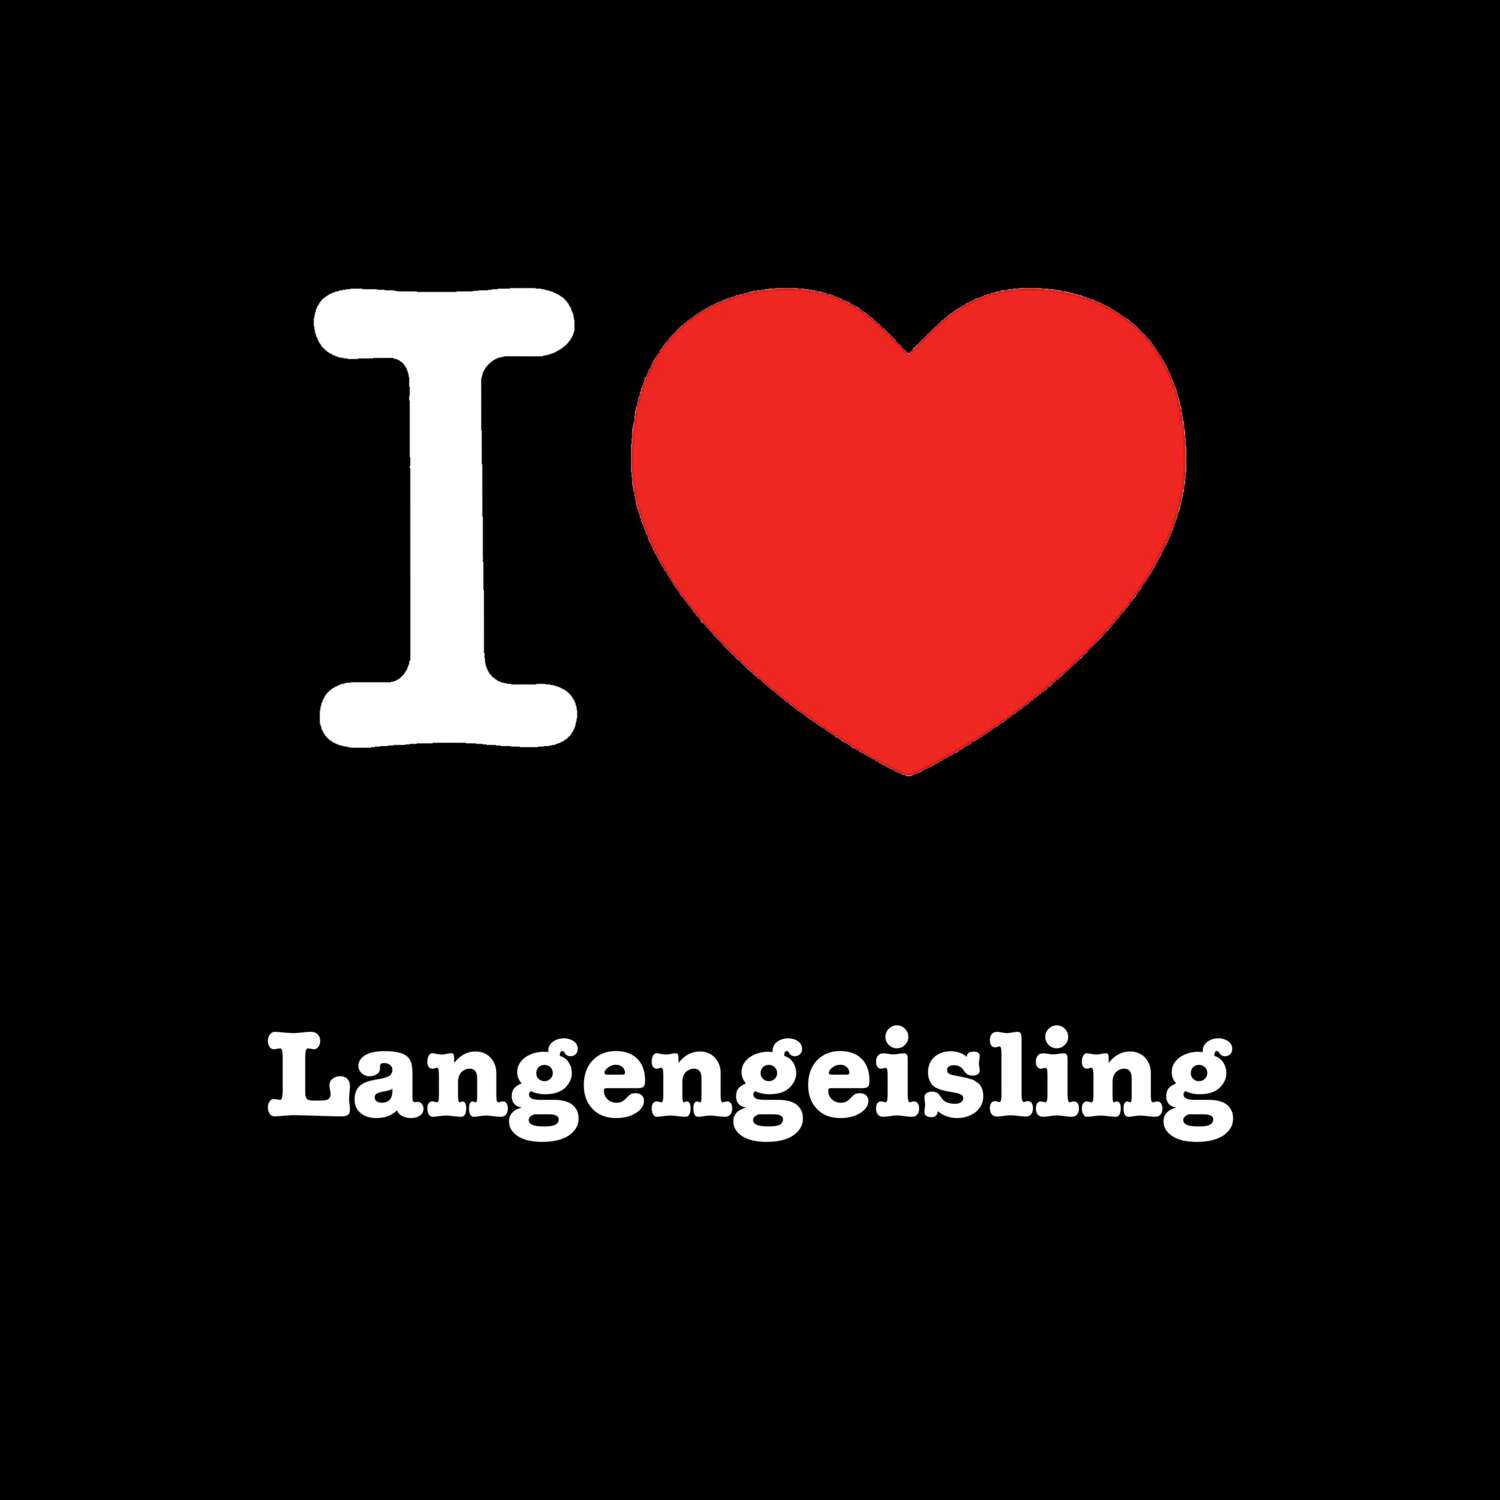 Langengeisling T-Shirt »I love«